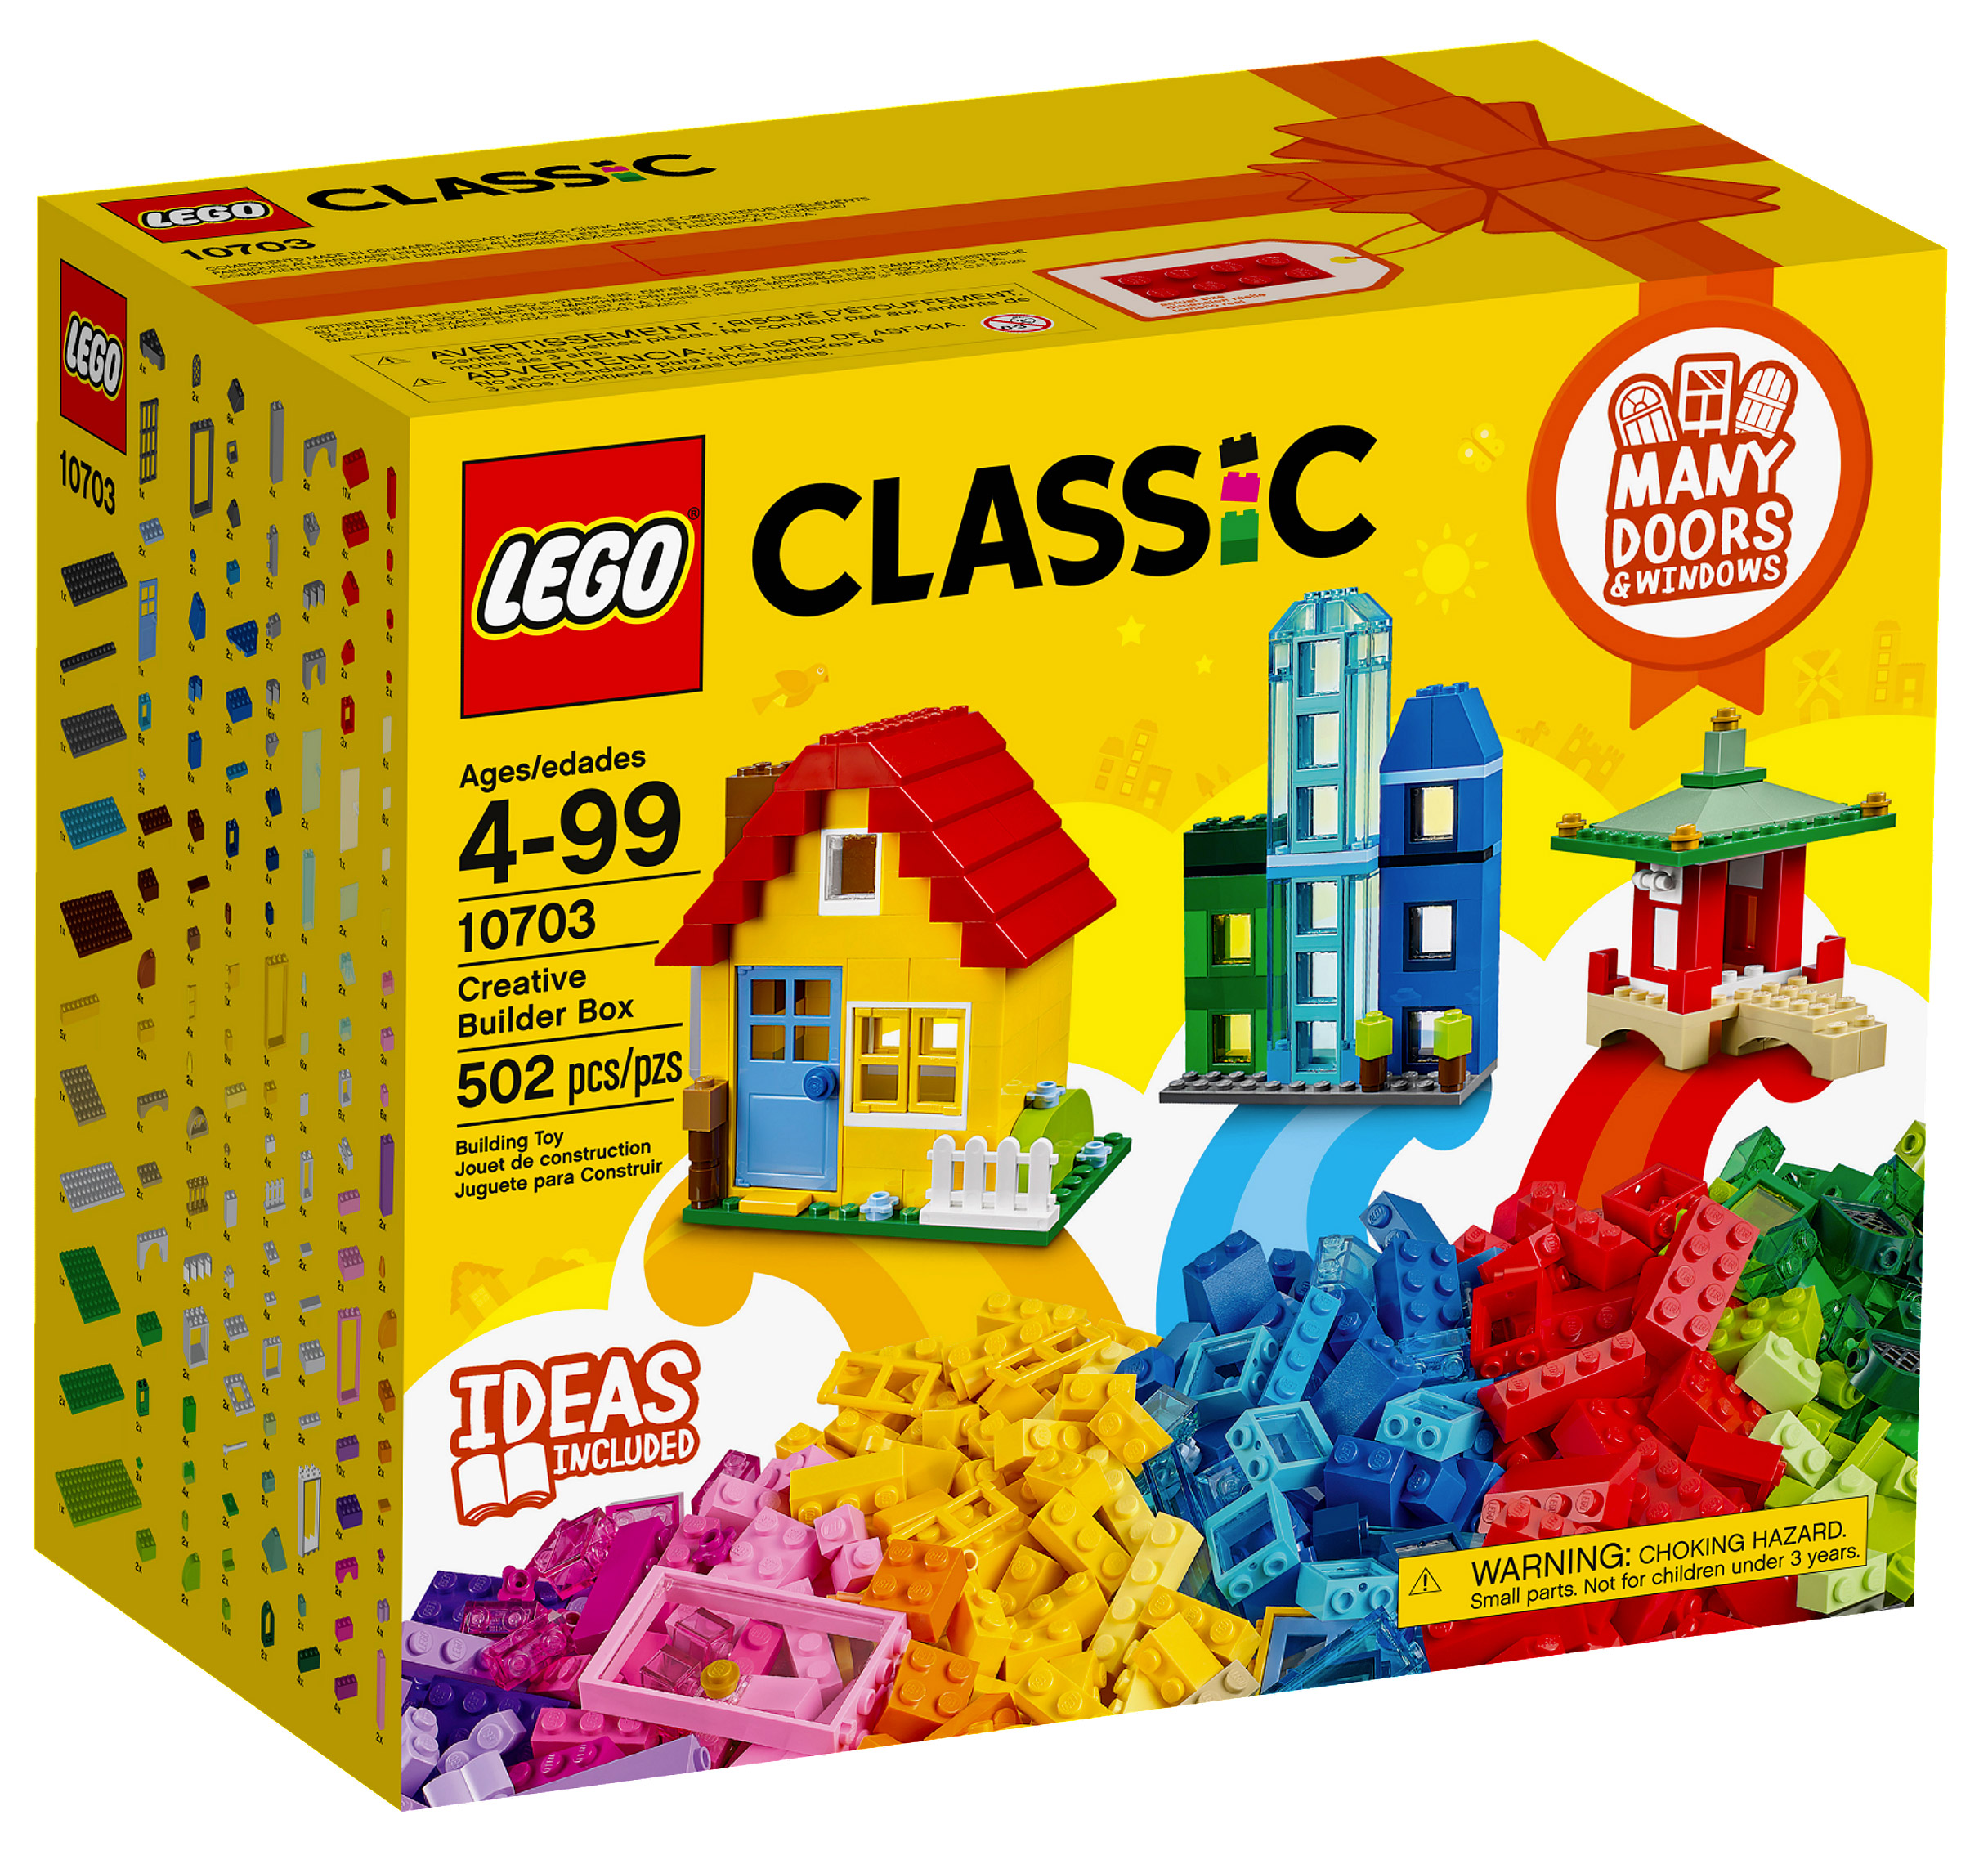 LEGO Classic 10703 pas cher, Boîte de constructions urbaines